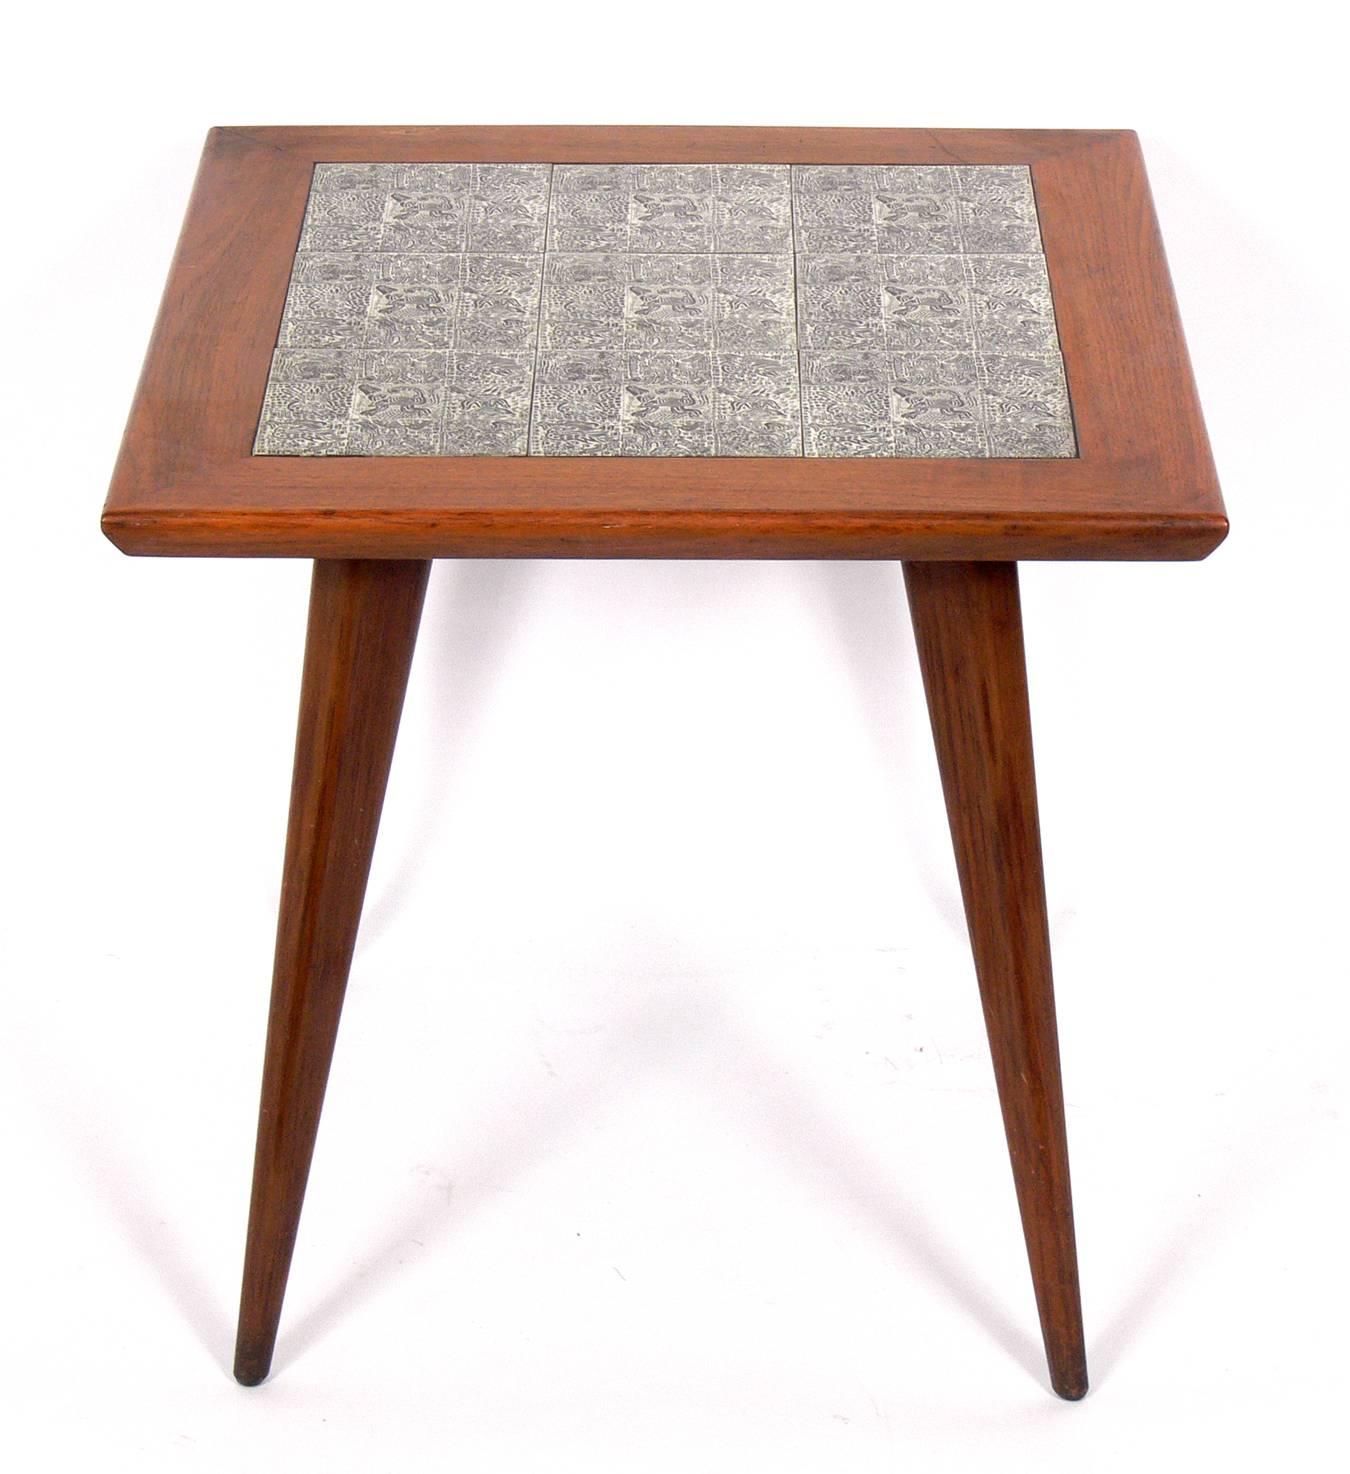 Brazilian Mid-Century end table with inset tiles, Brazil, circa 1960s. Retains warm original patina.